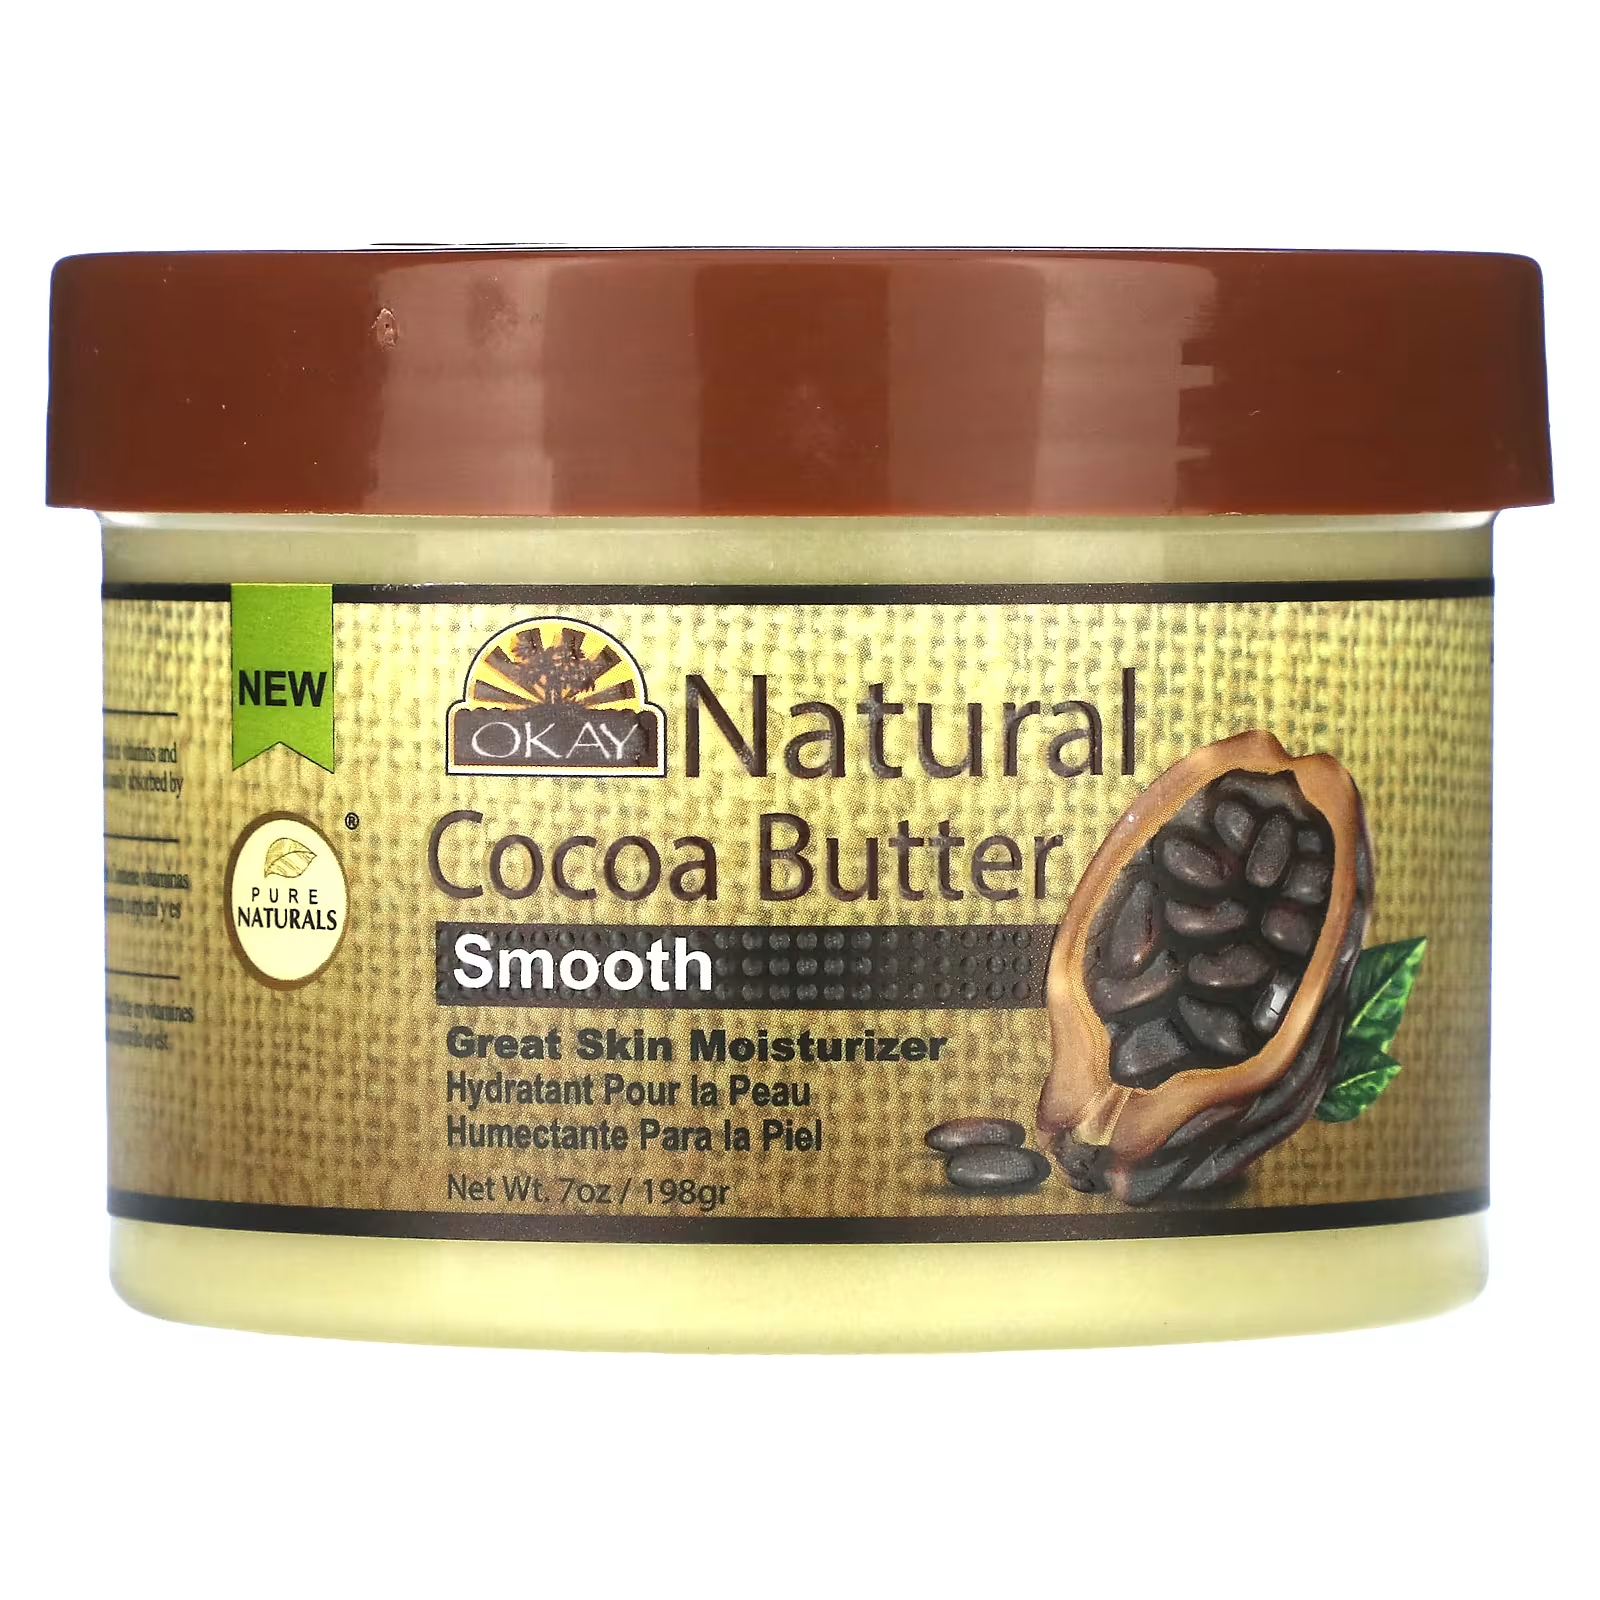 Масло какао Okay Pure Naturals, 198 г африканское масло ши okay pure naturals для кожи и волос 212 г